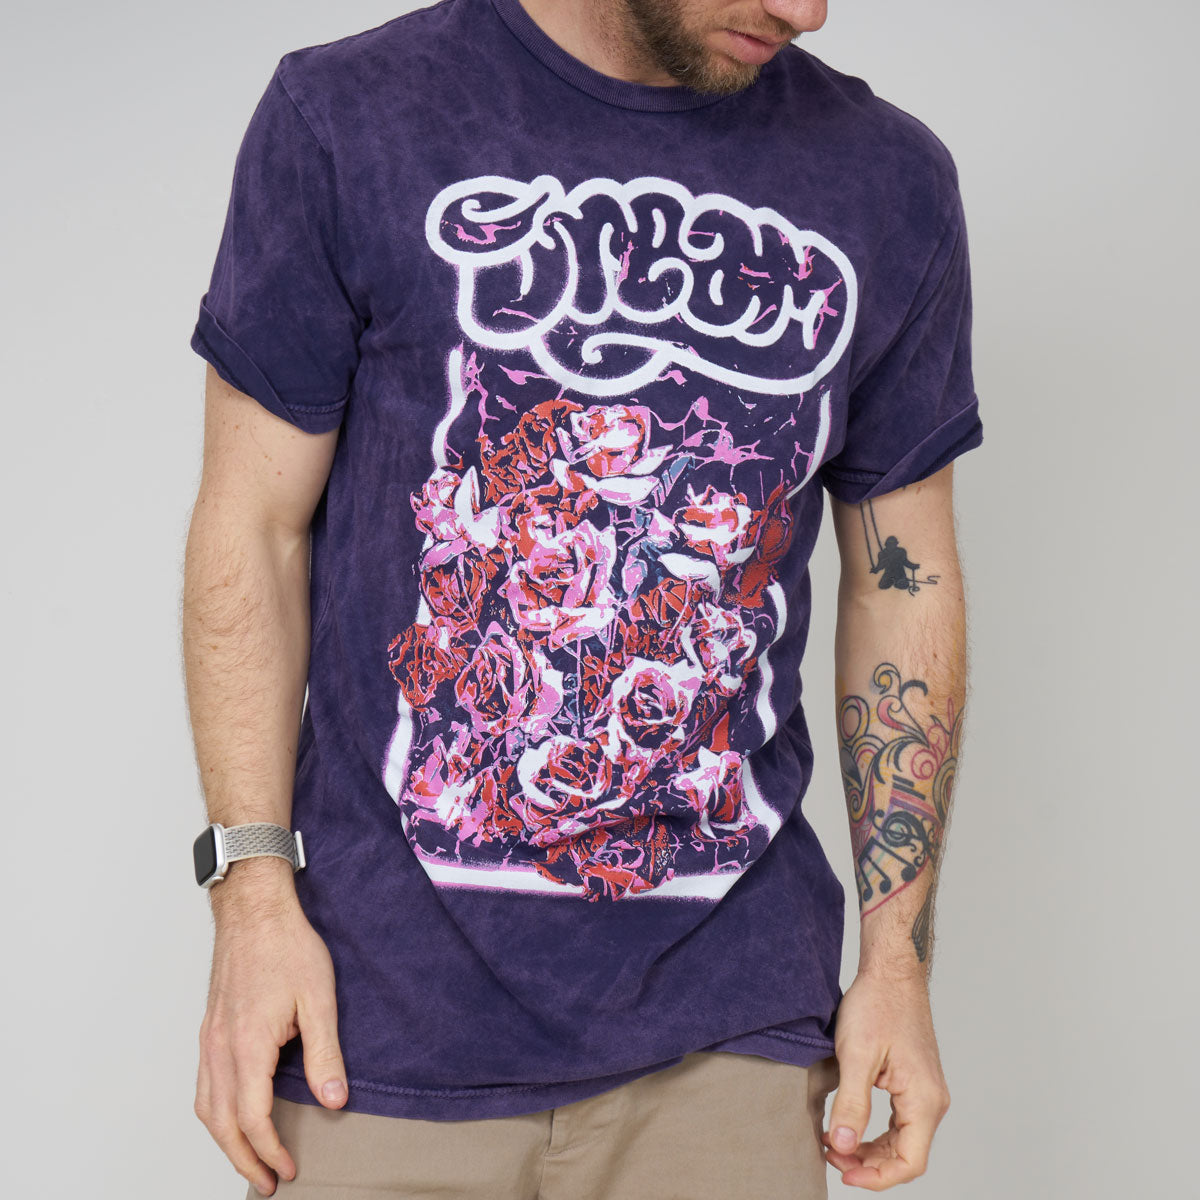 Dream Sleep T-Shirt - Purple Cloud